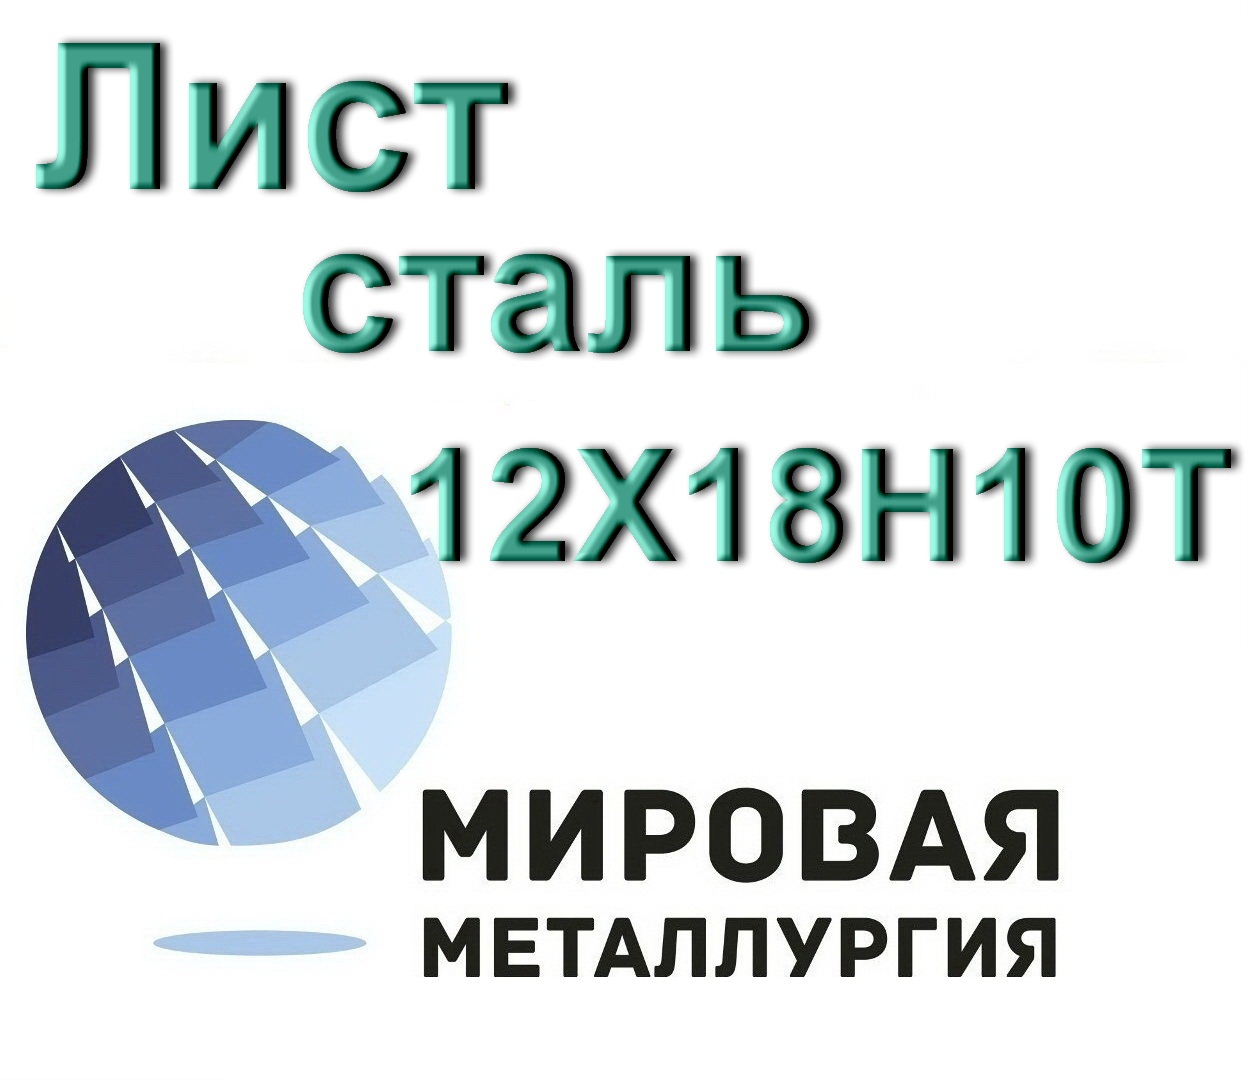 Лист сталь 12Х18Н10Т в городе Екатеринбург, фото 1, телефон продавца: +7 (343) 202-21-64